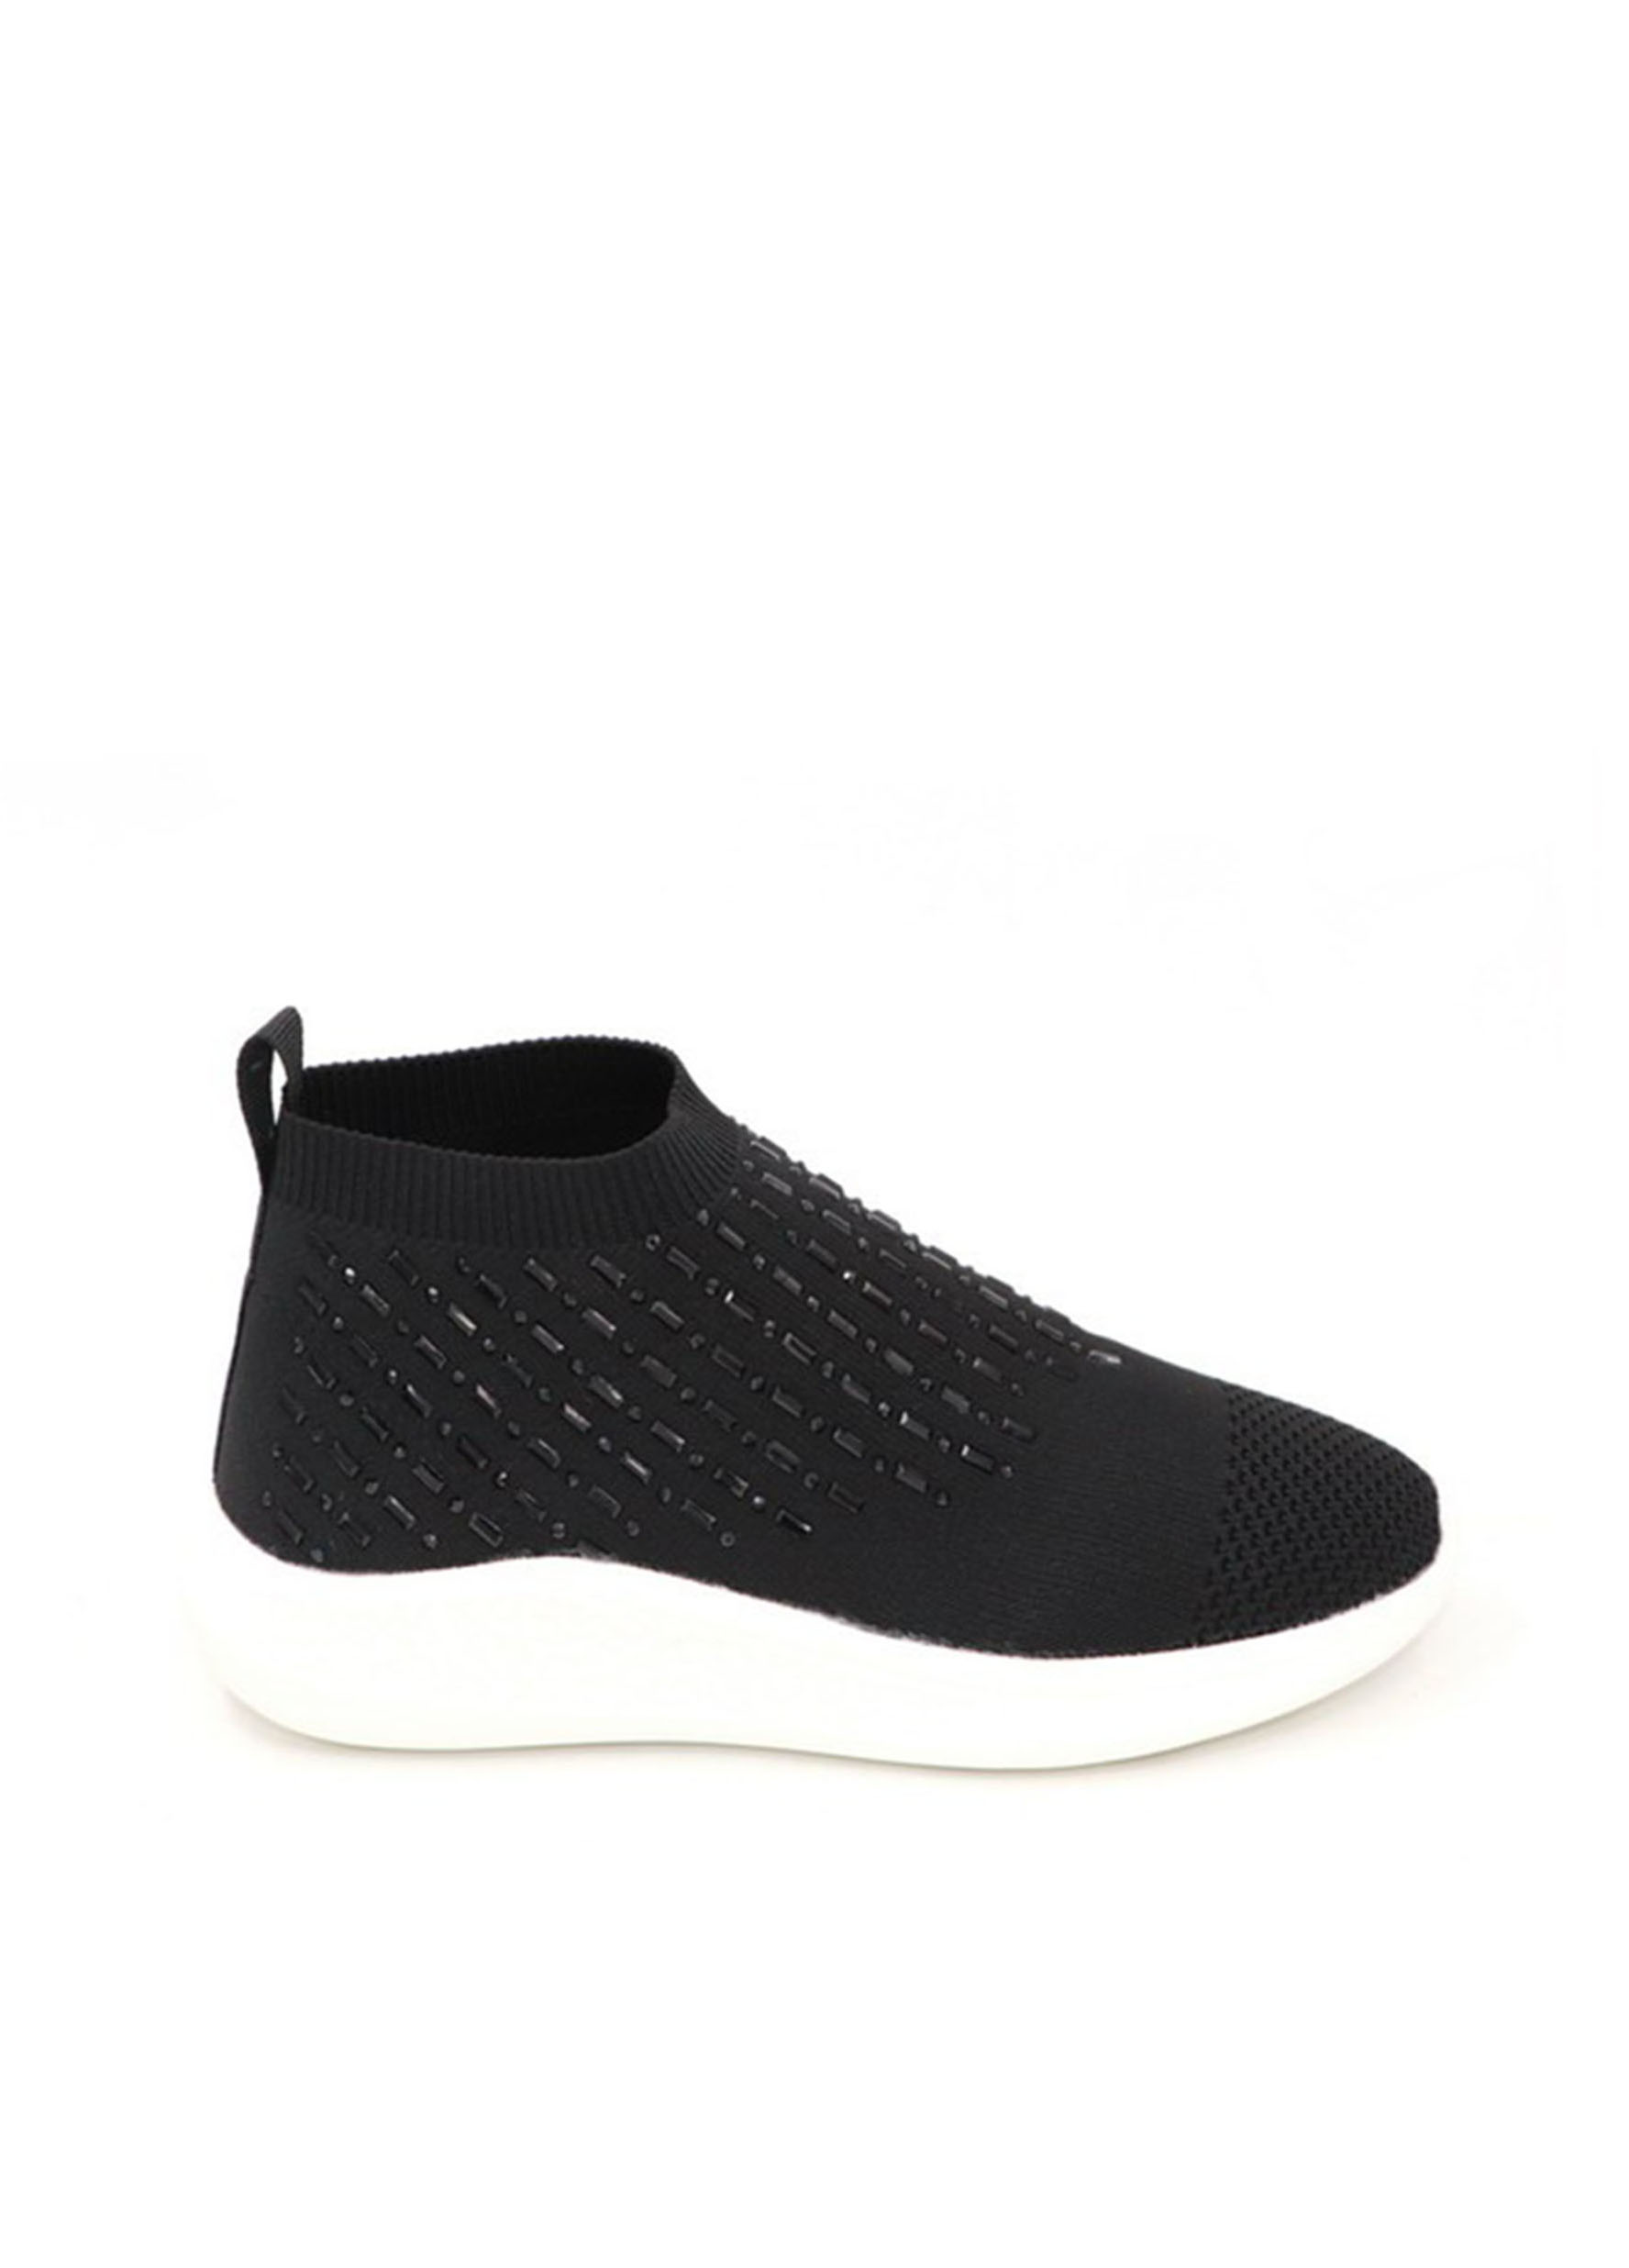 Levi's Shoes & More - Γυναικεία Loafers Francesco Milano